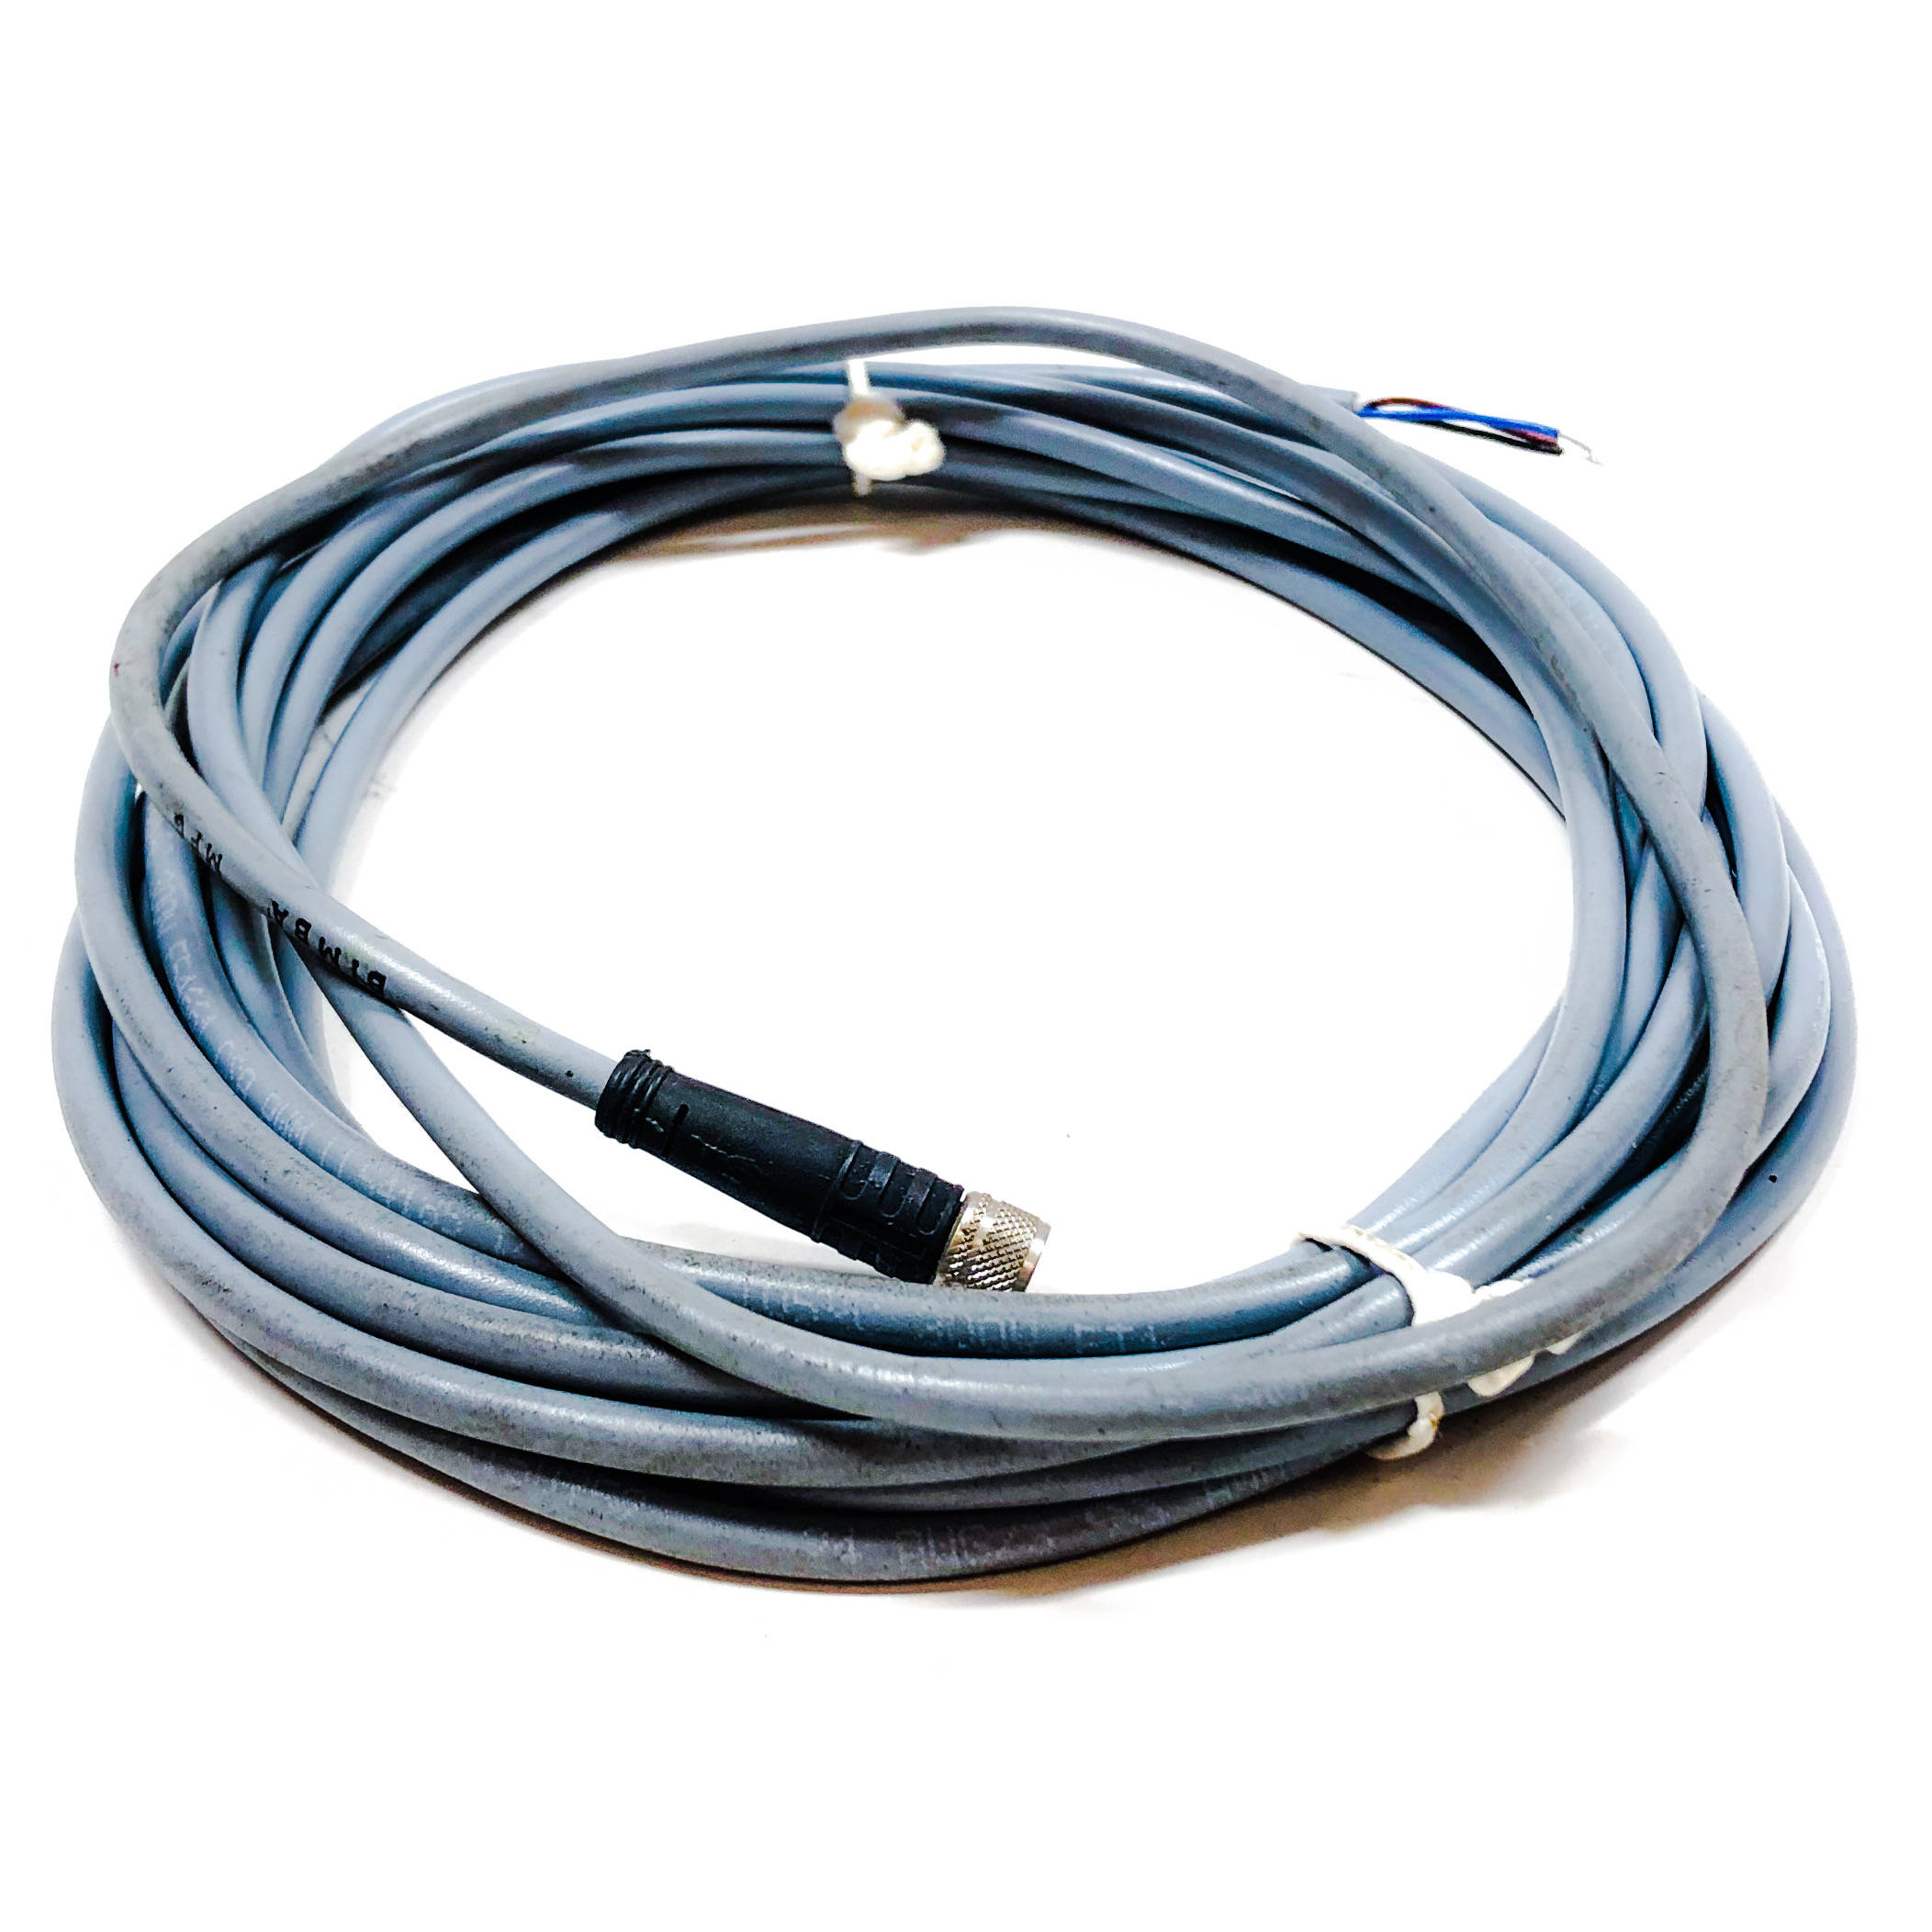 MRQCX Bimba Cable, 24AWG/3 2